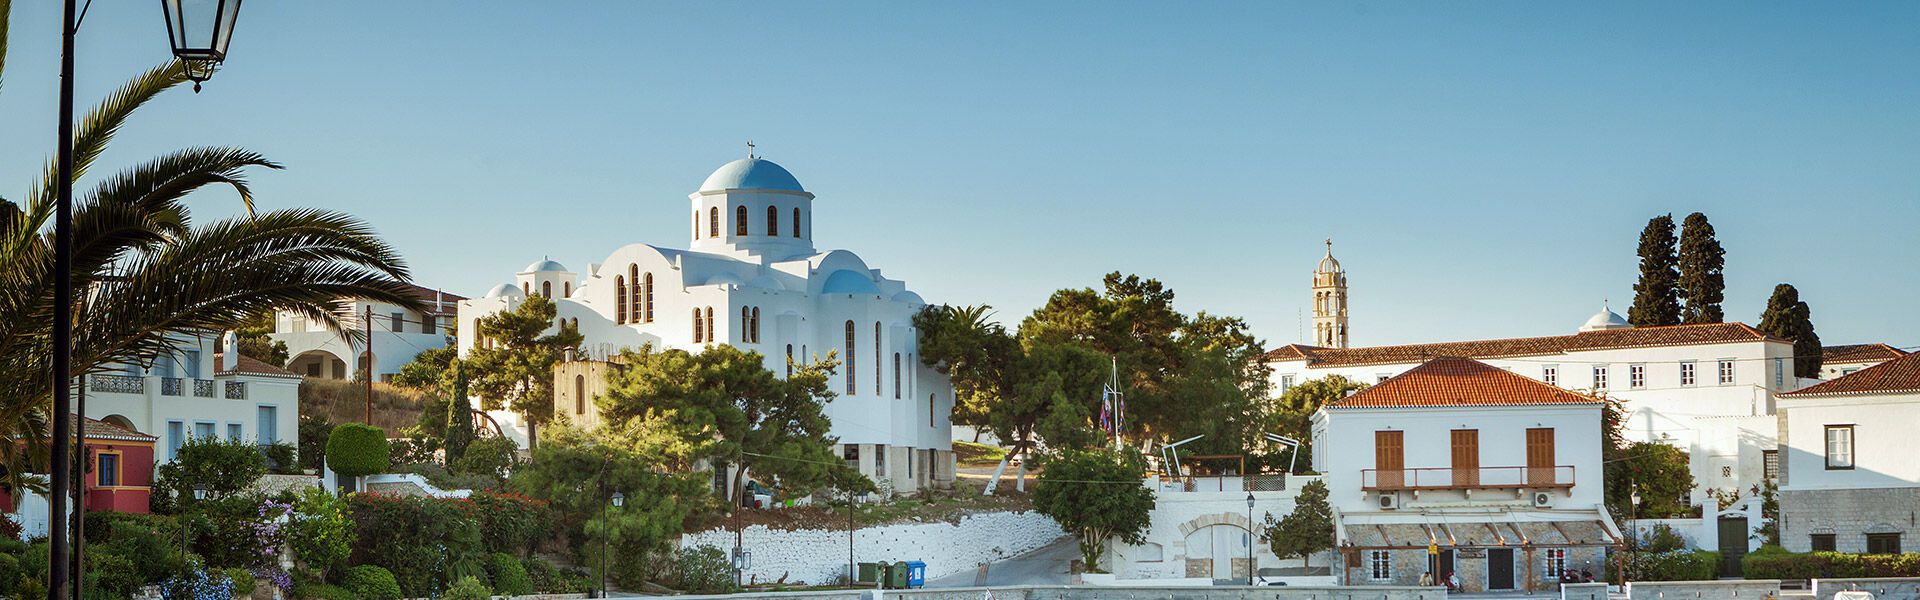 Church in Spetses island